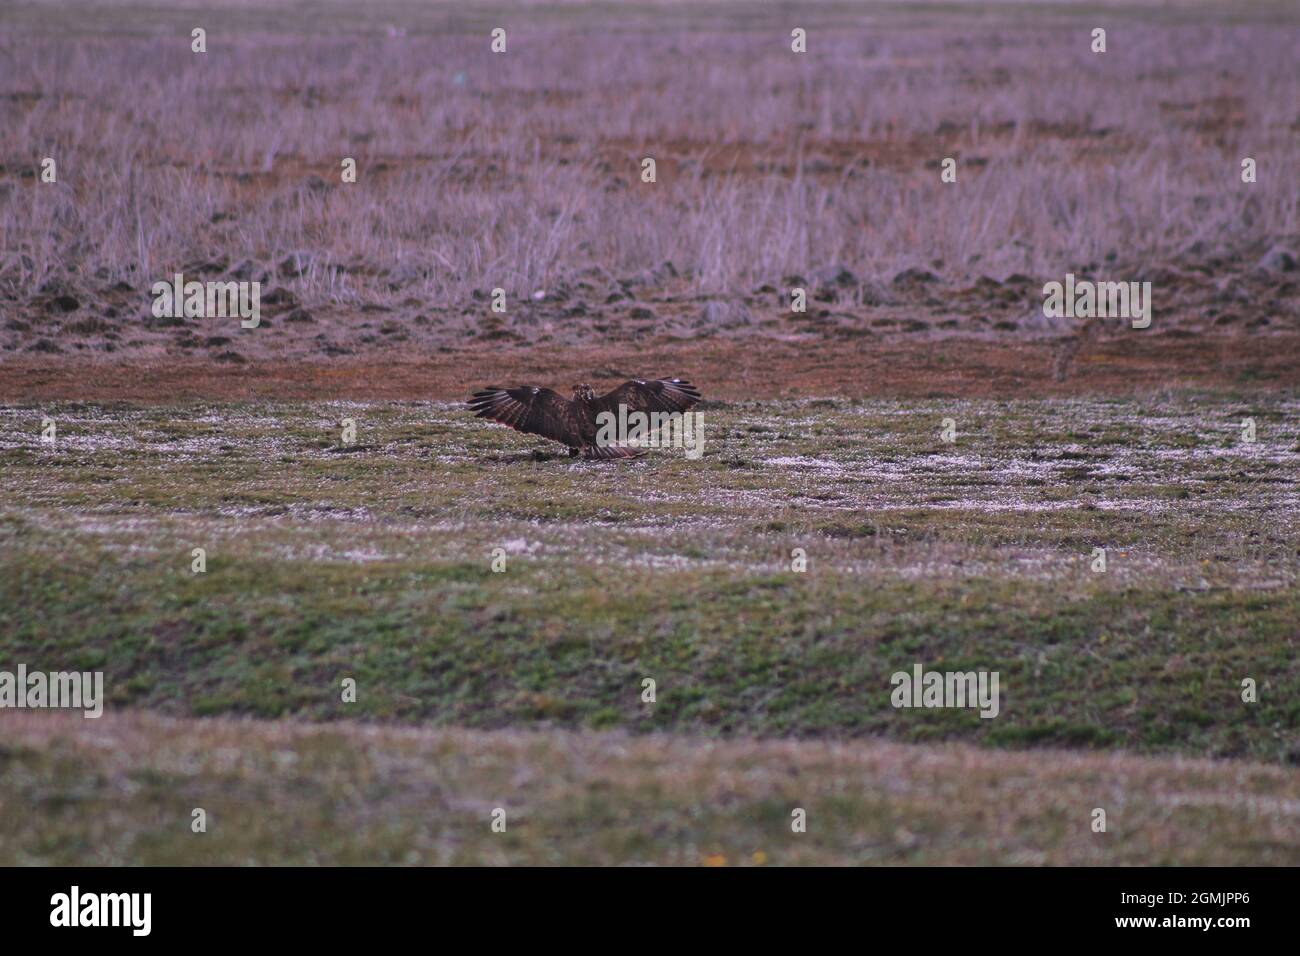 Hawk in the field, hunter bird, purple colors, beautiful nature and wildlife Stock Photo